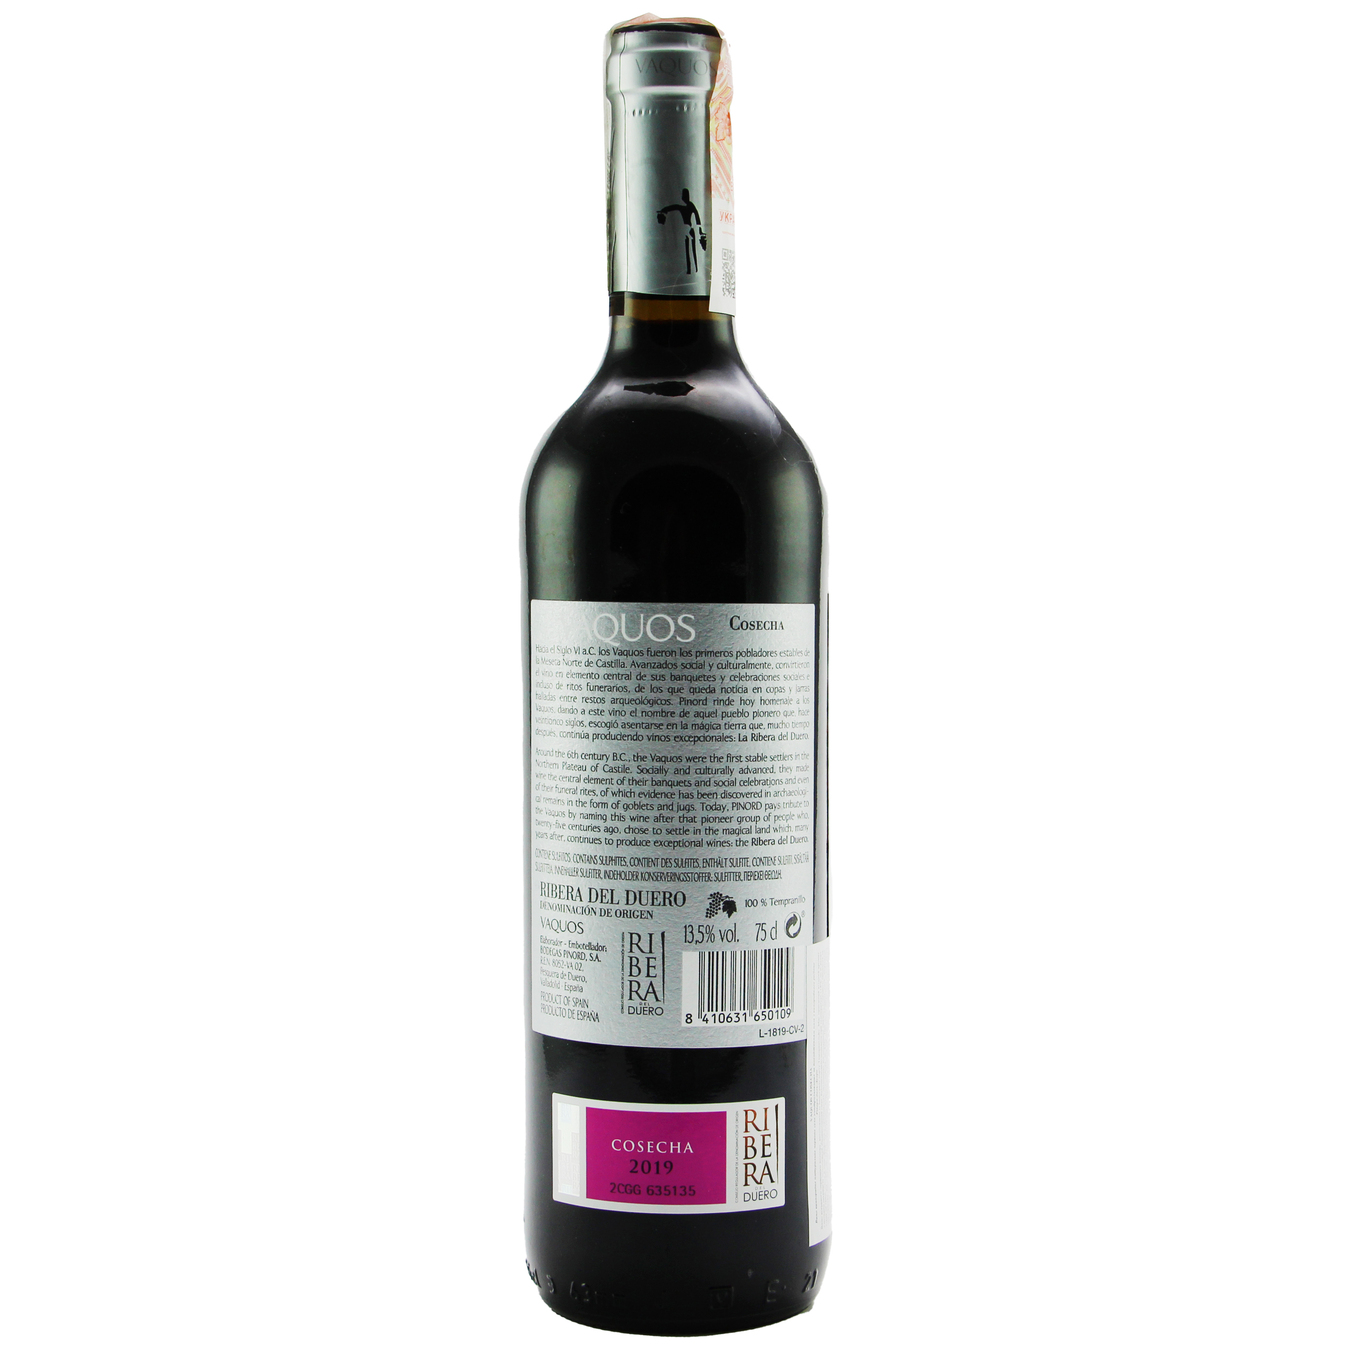 Vaquos Cosecha dry red wine 13% 0,75l 2